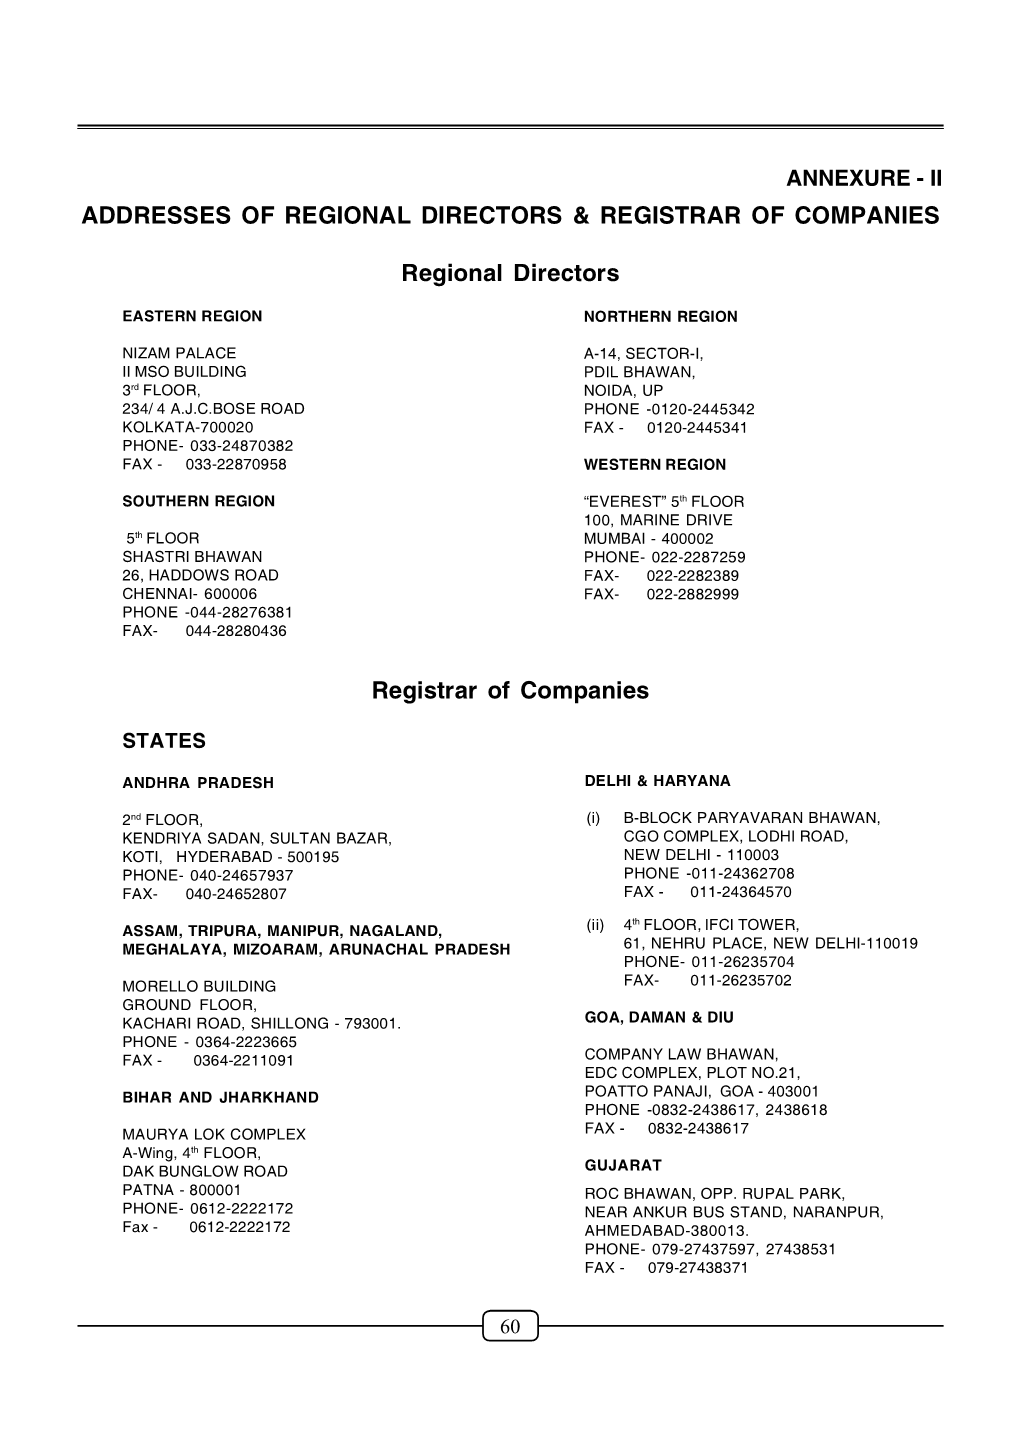 Addresses of Regional Directors & Registrar of Companies